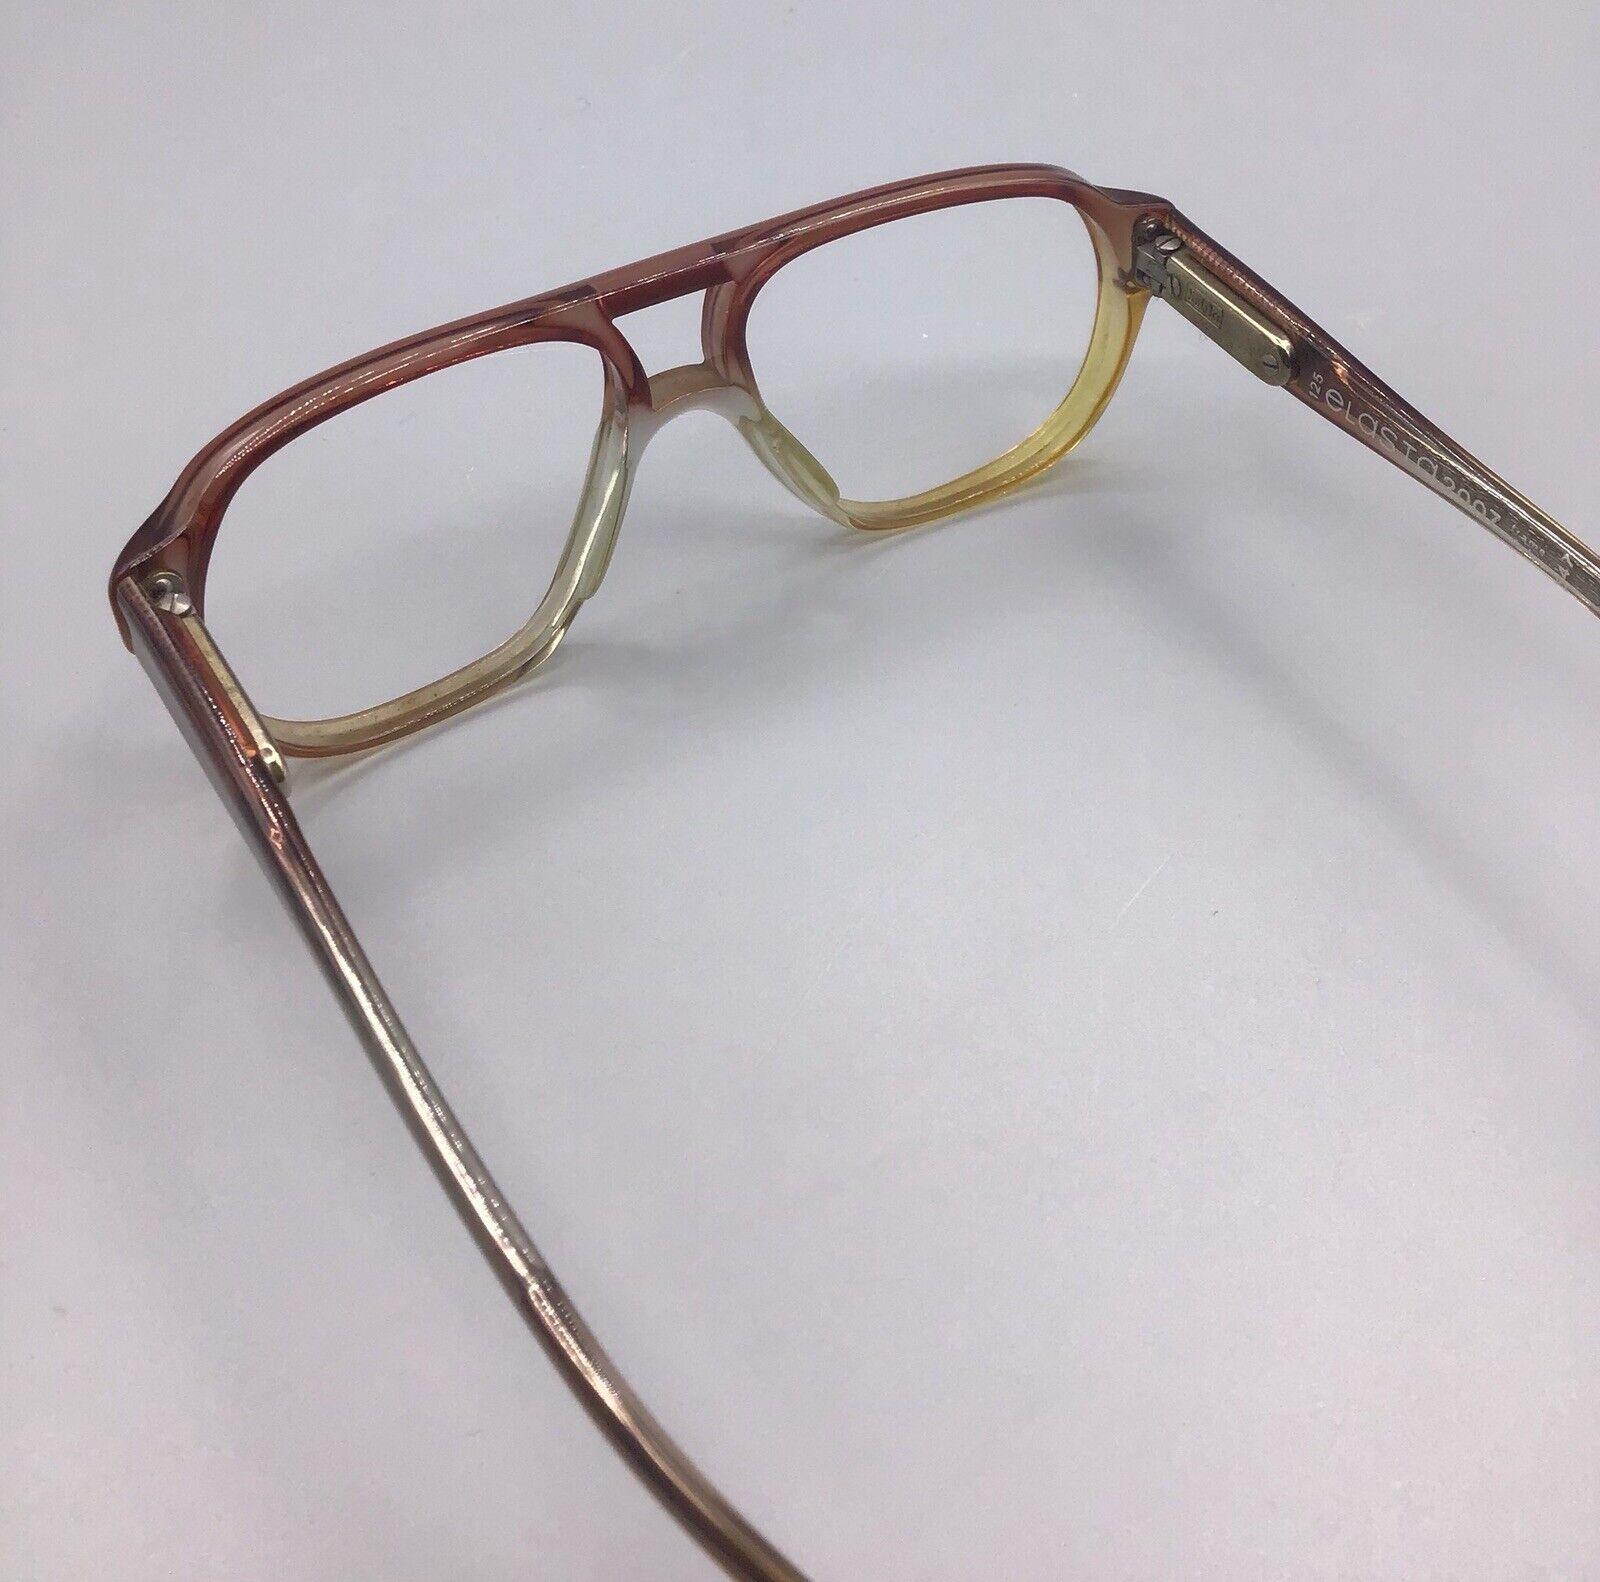 Safilo occhiale vintage elasta 2007 frame Italy brillen lunettes